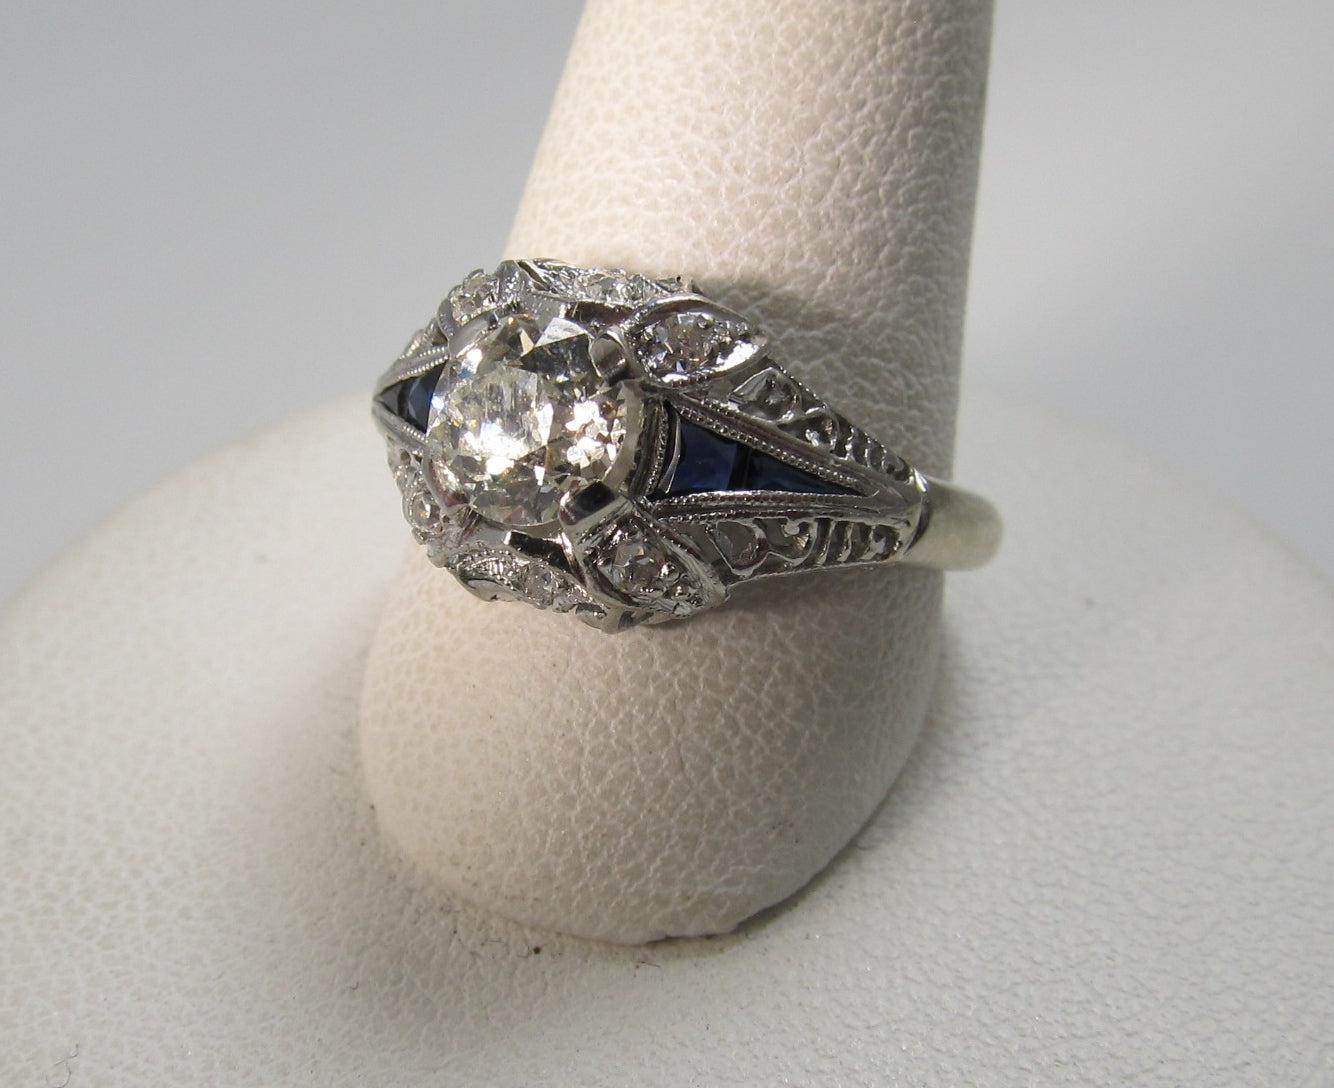 Antique platinum filigree ring with sapphires and a .75ct diamond, circa 1920.